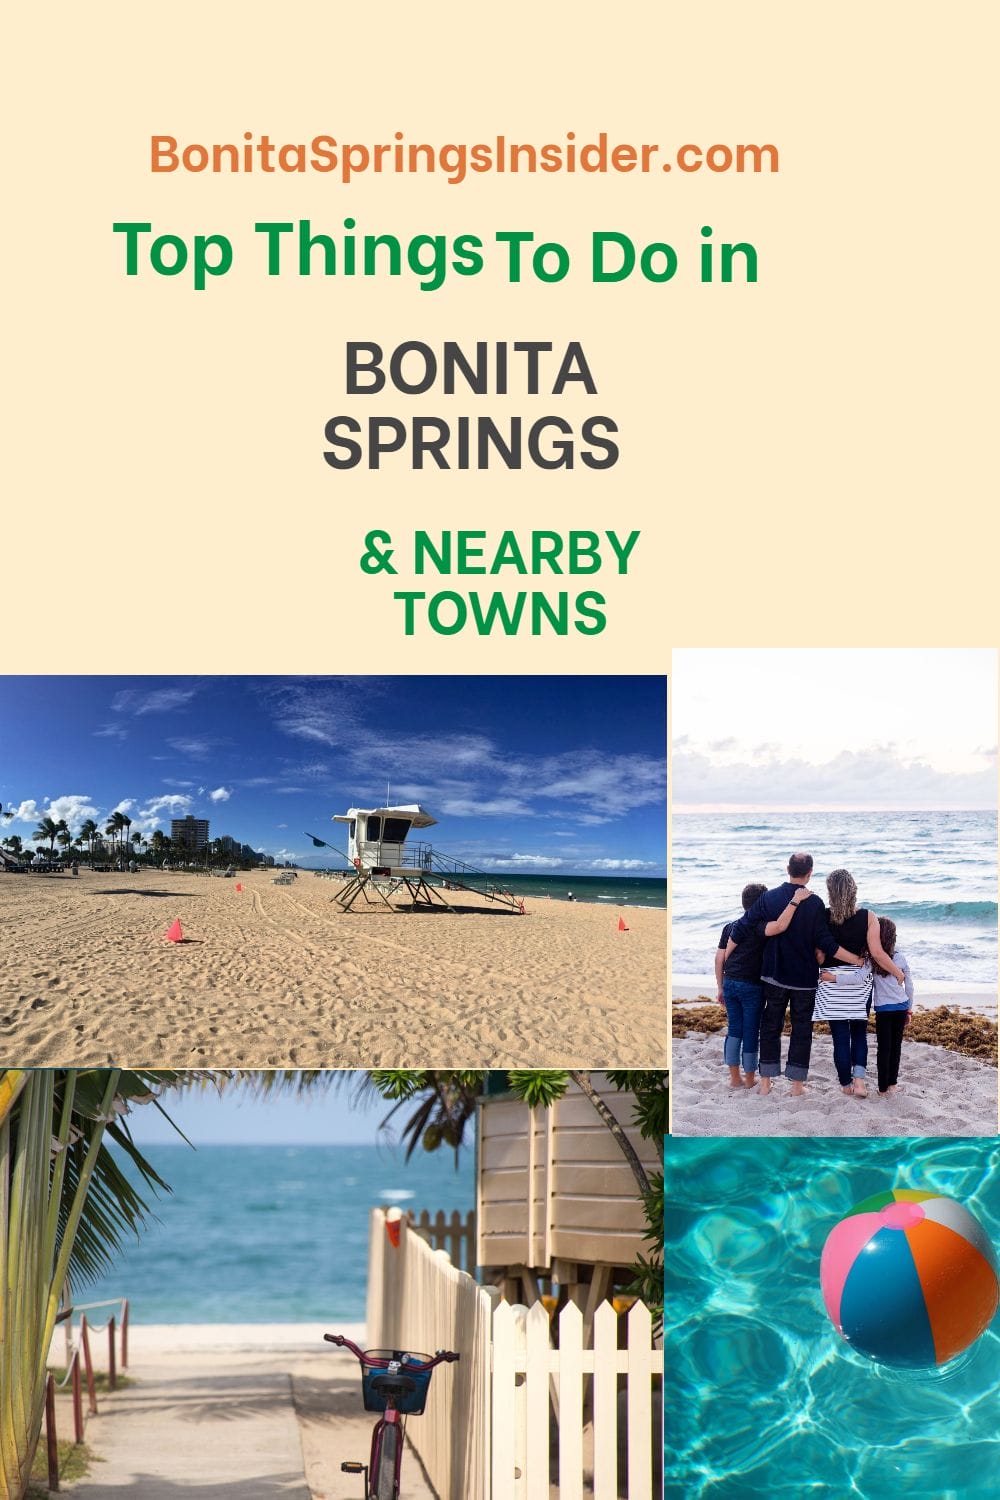 bonita springs tourism guide